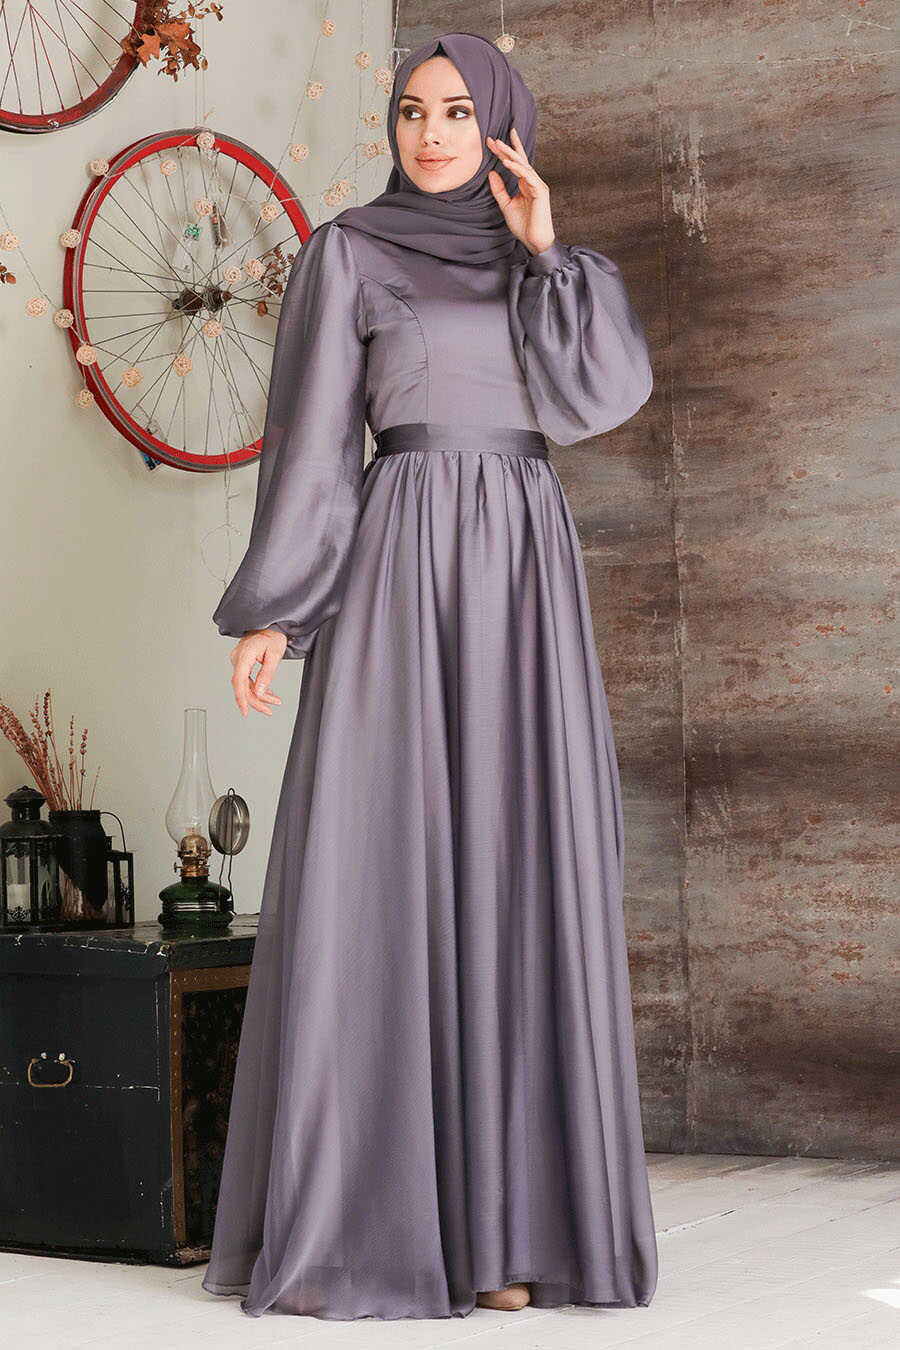 Neva Style - Elegant Dark Lila Islamic Clothing Evening Gown 5215KLILA